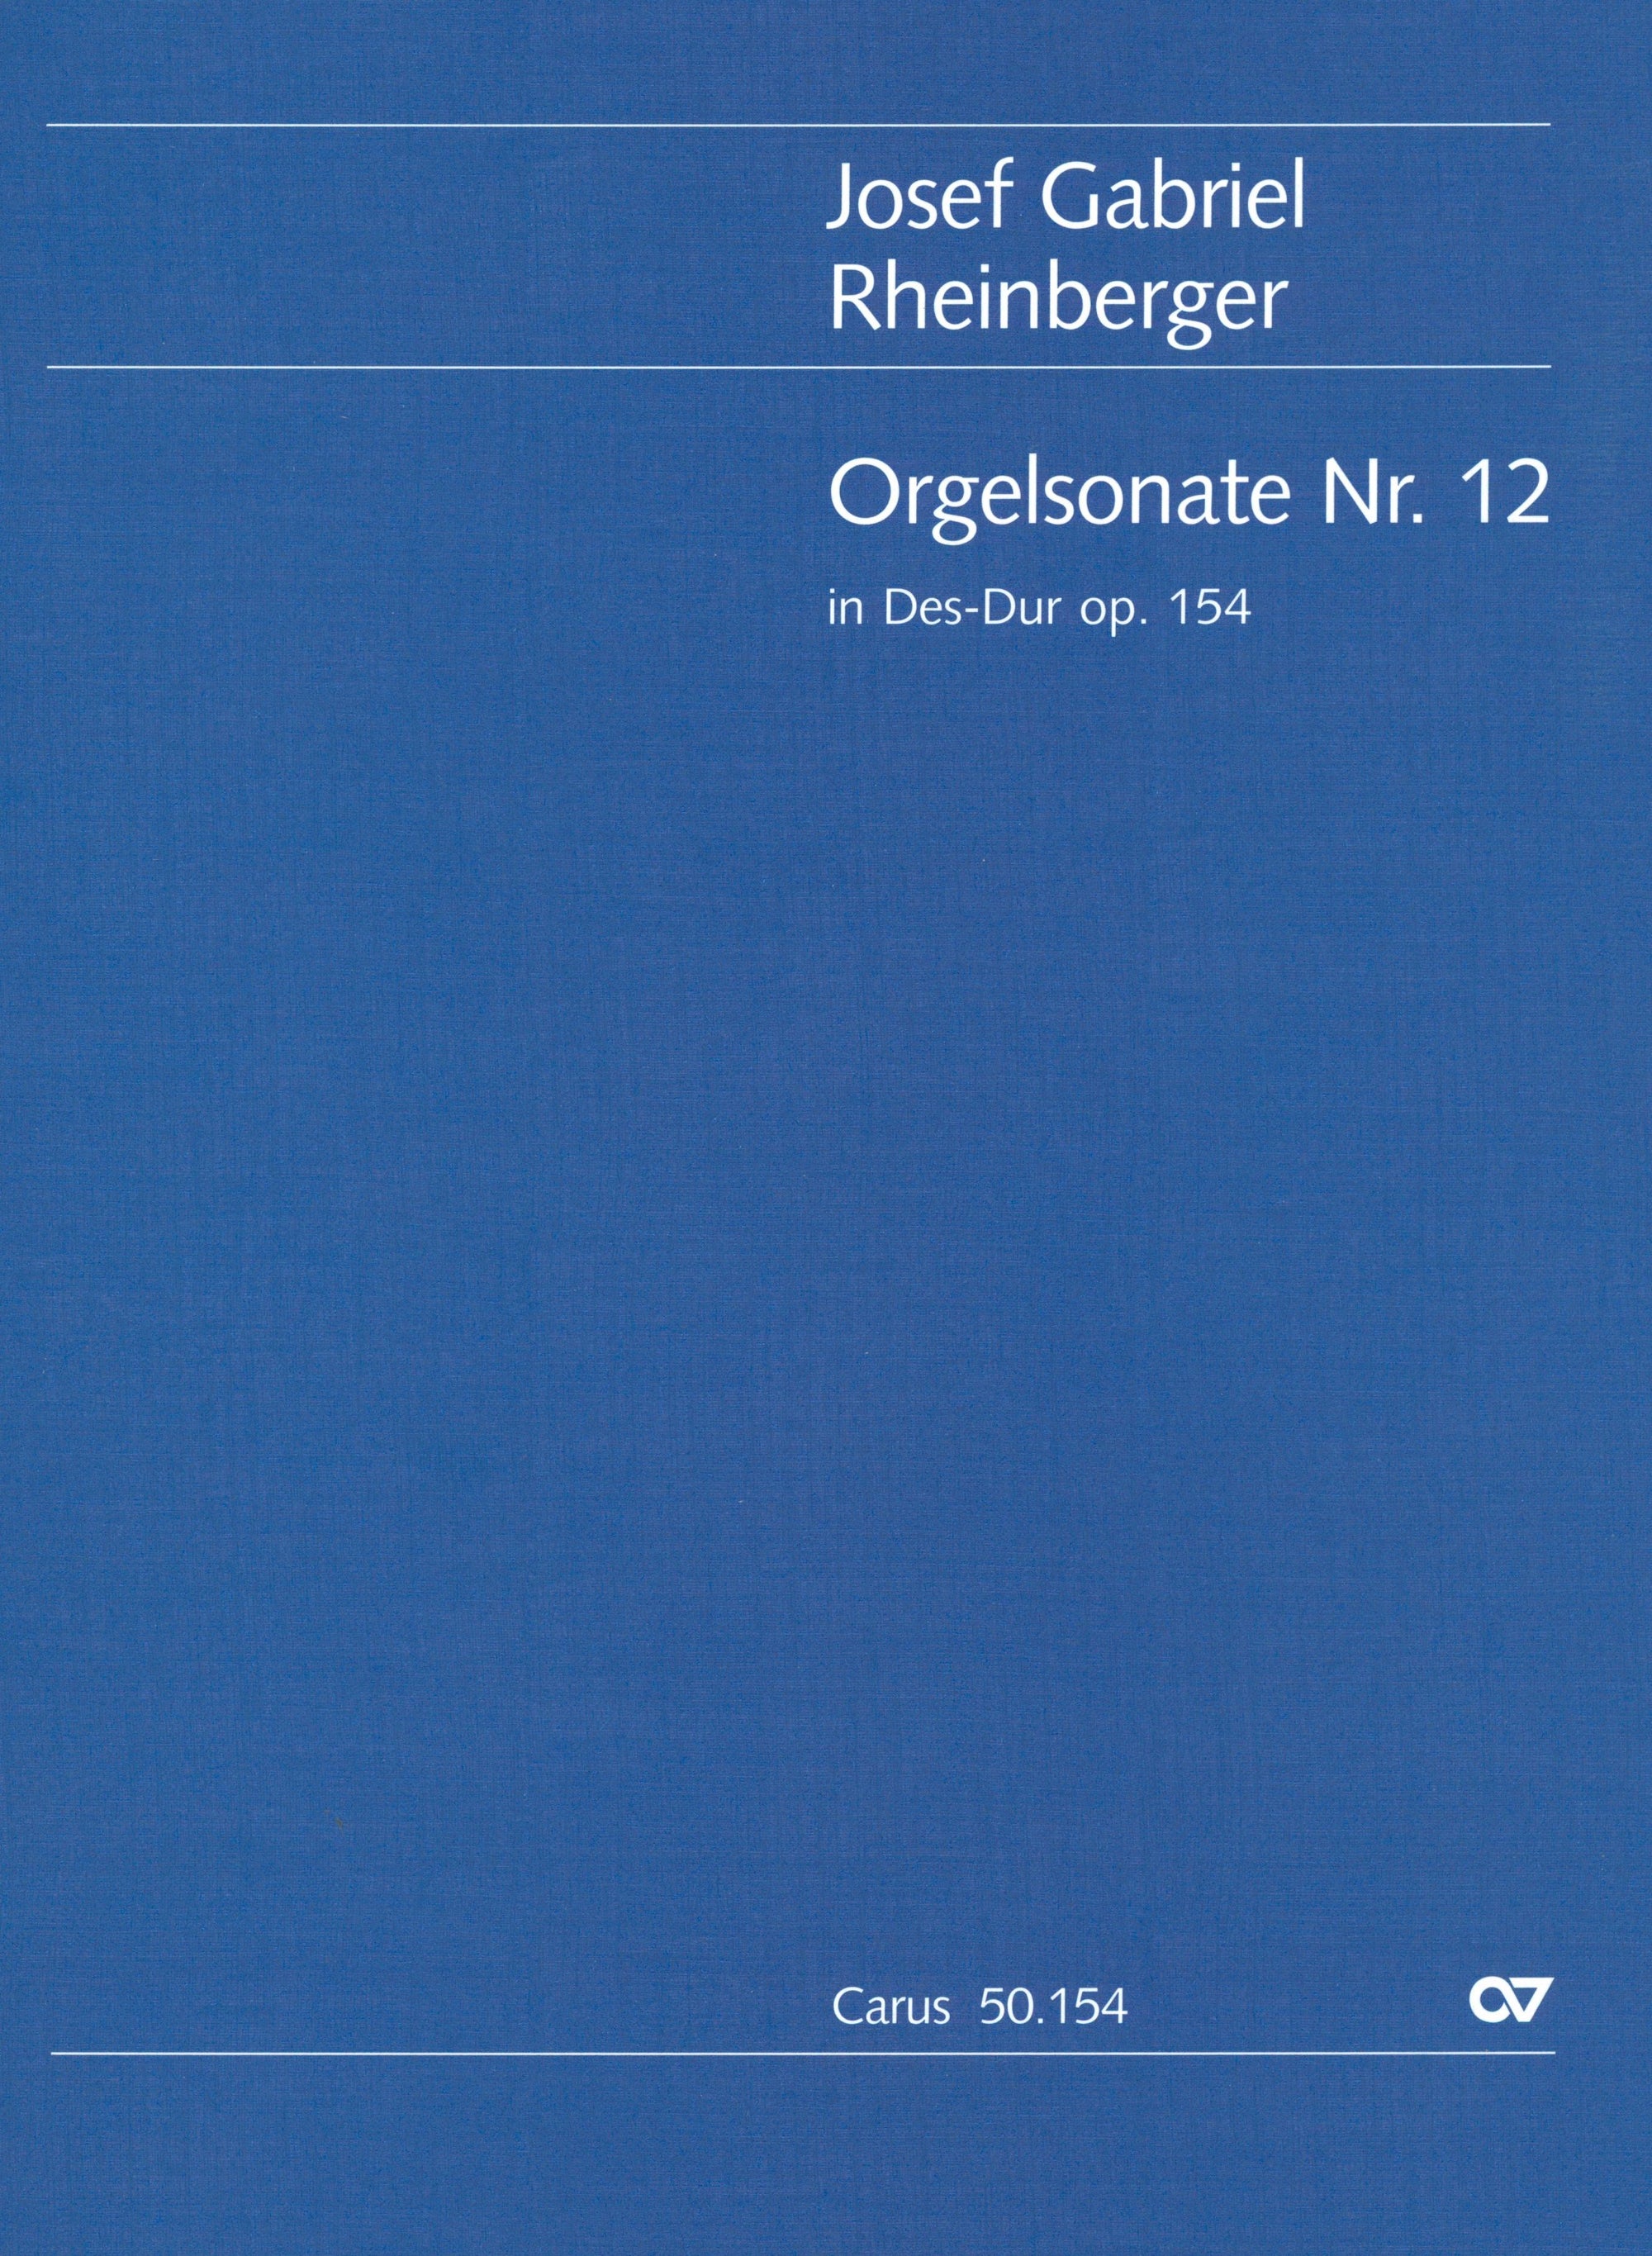 Rheinberger: Organ Sonata No. 12 in D-flat Major, Op. 154